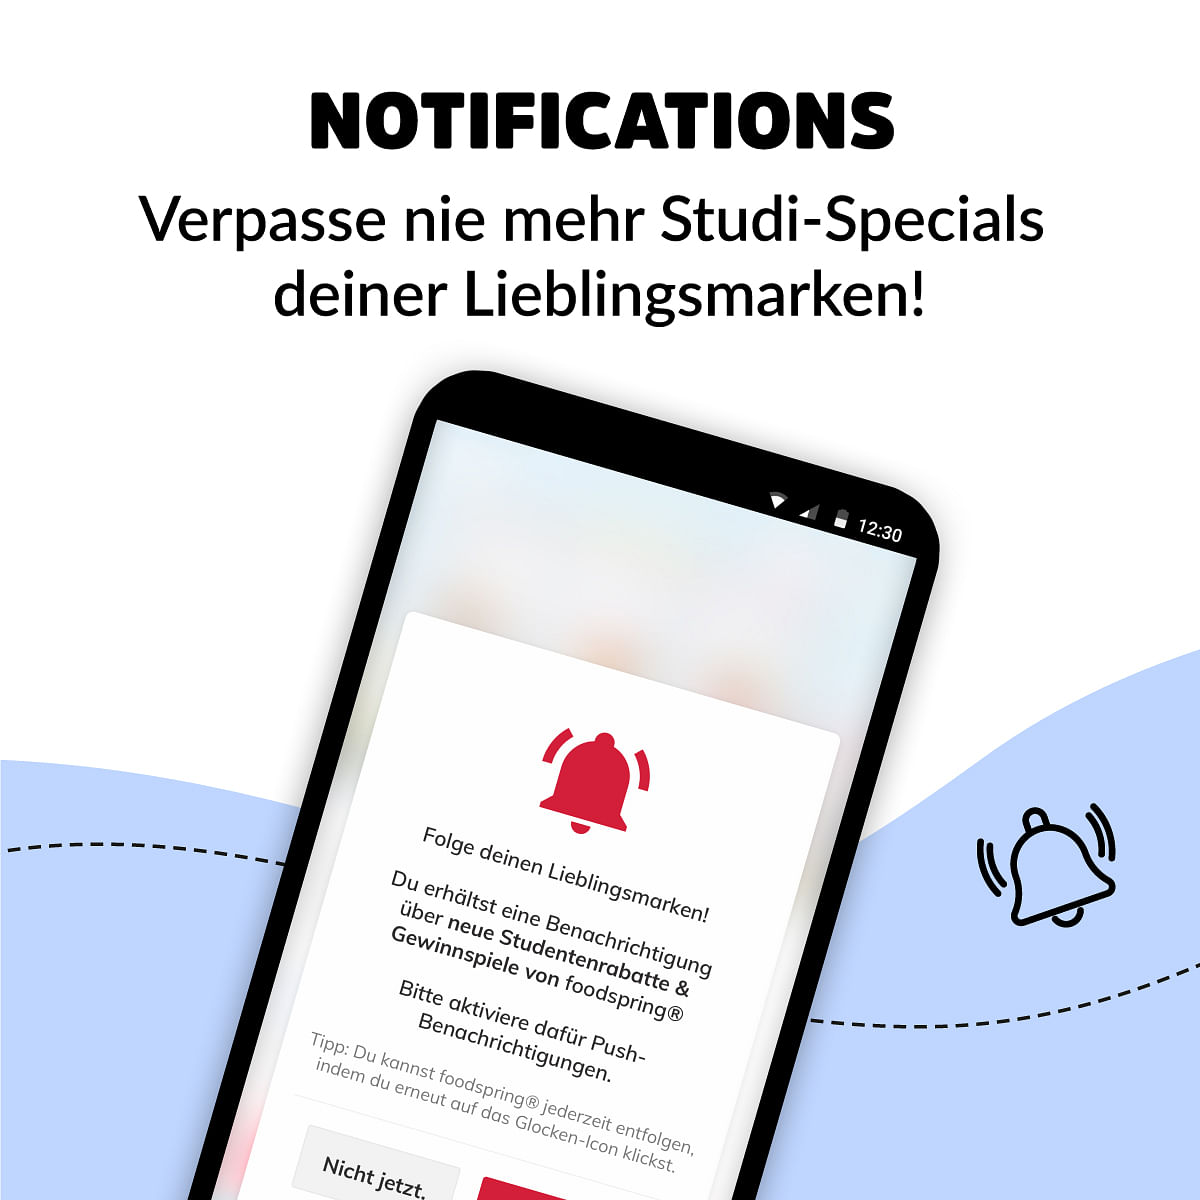 iamstudent app notifications